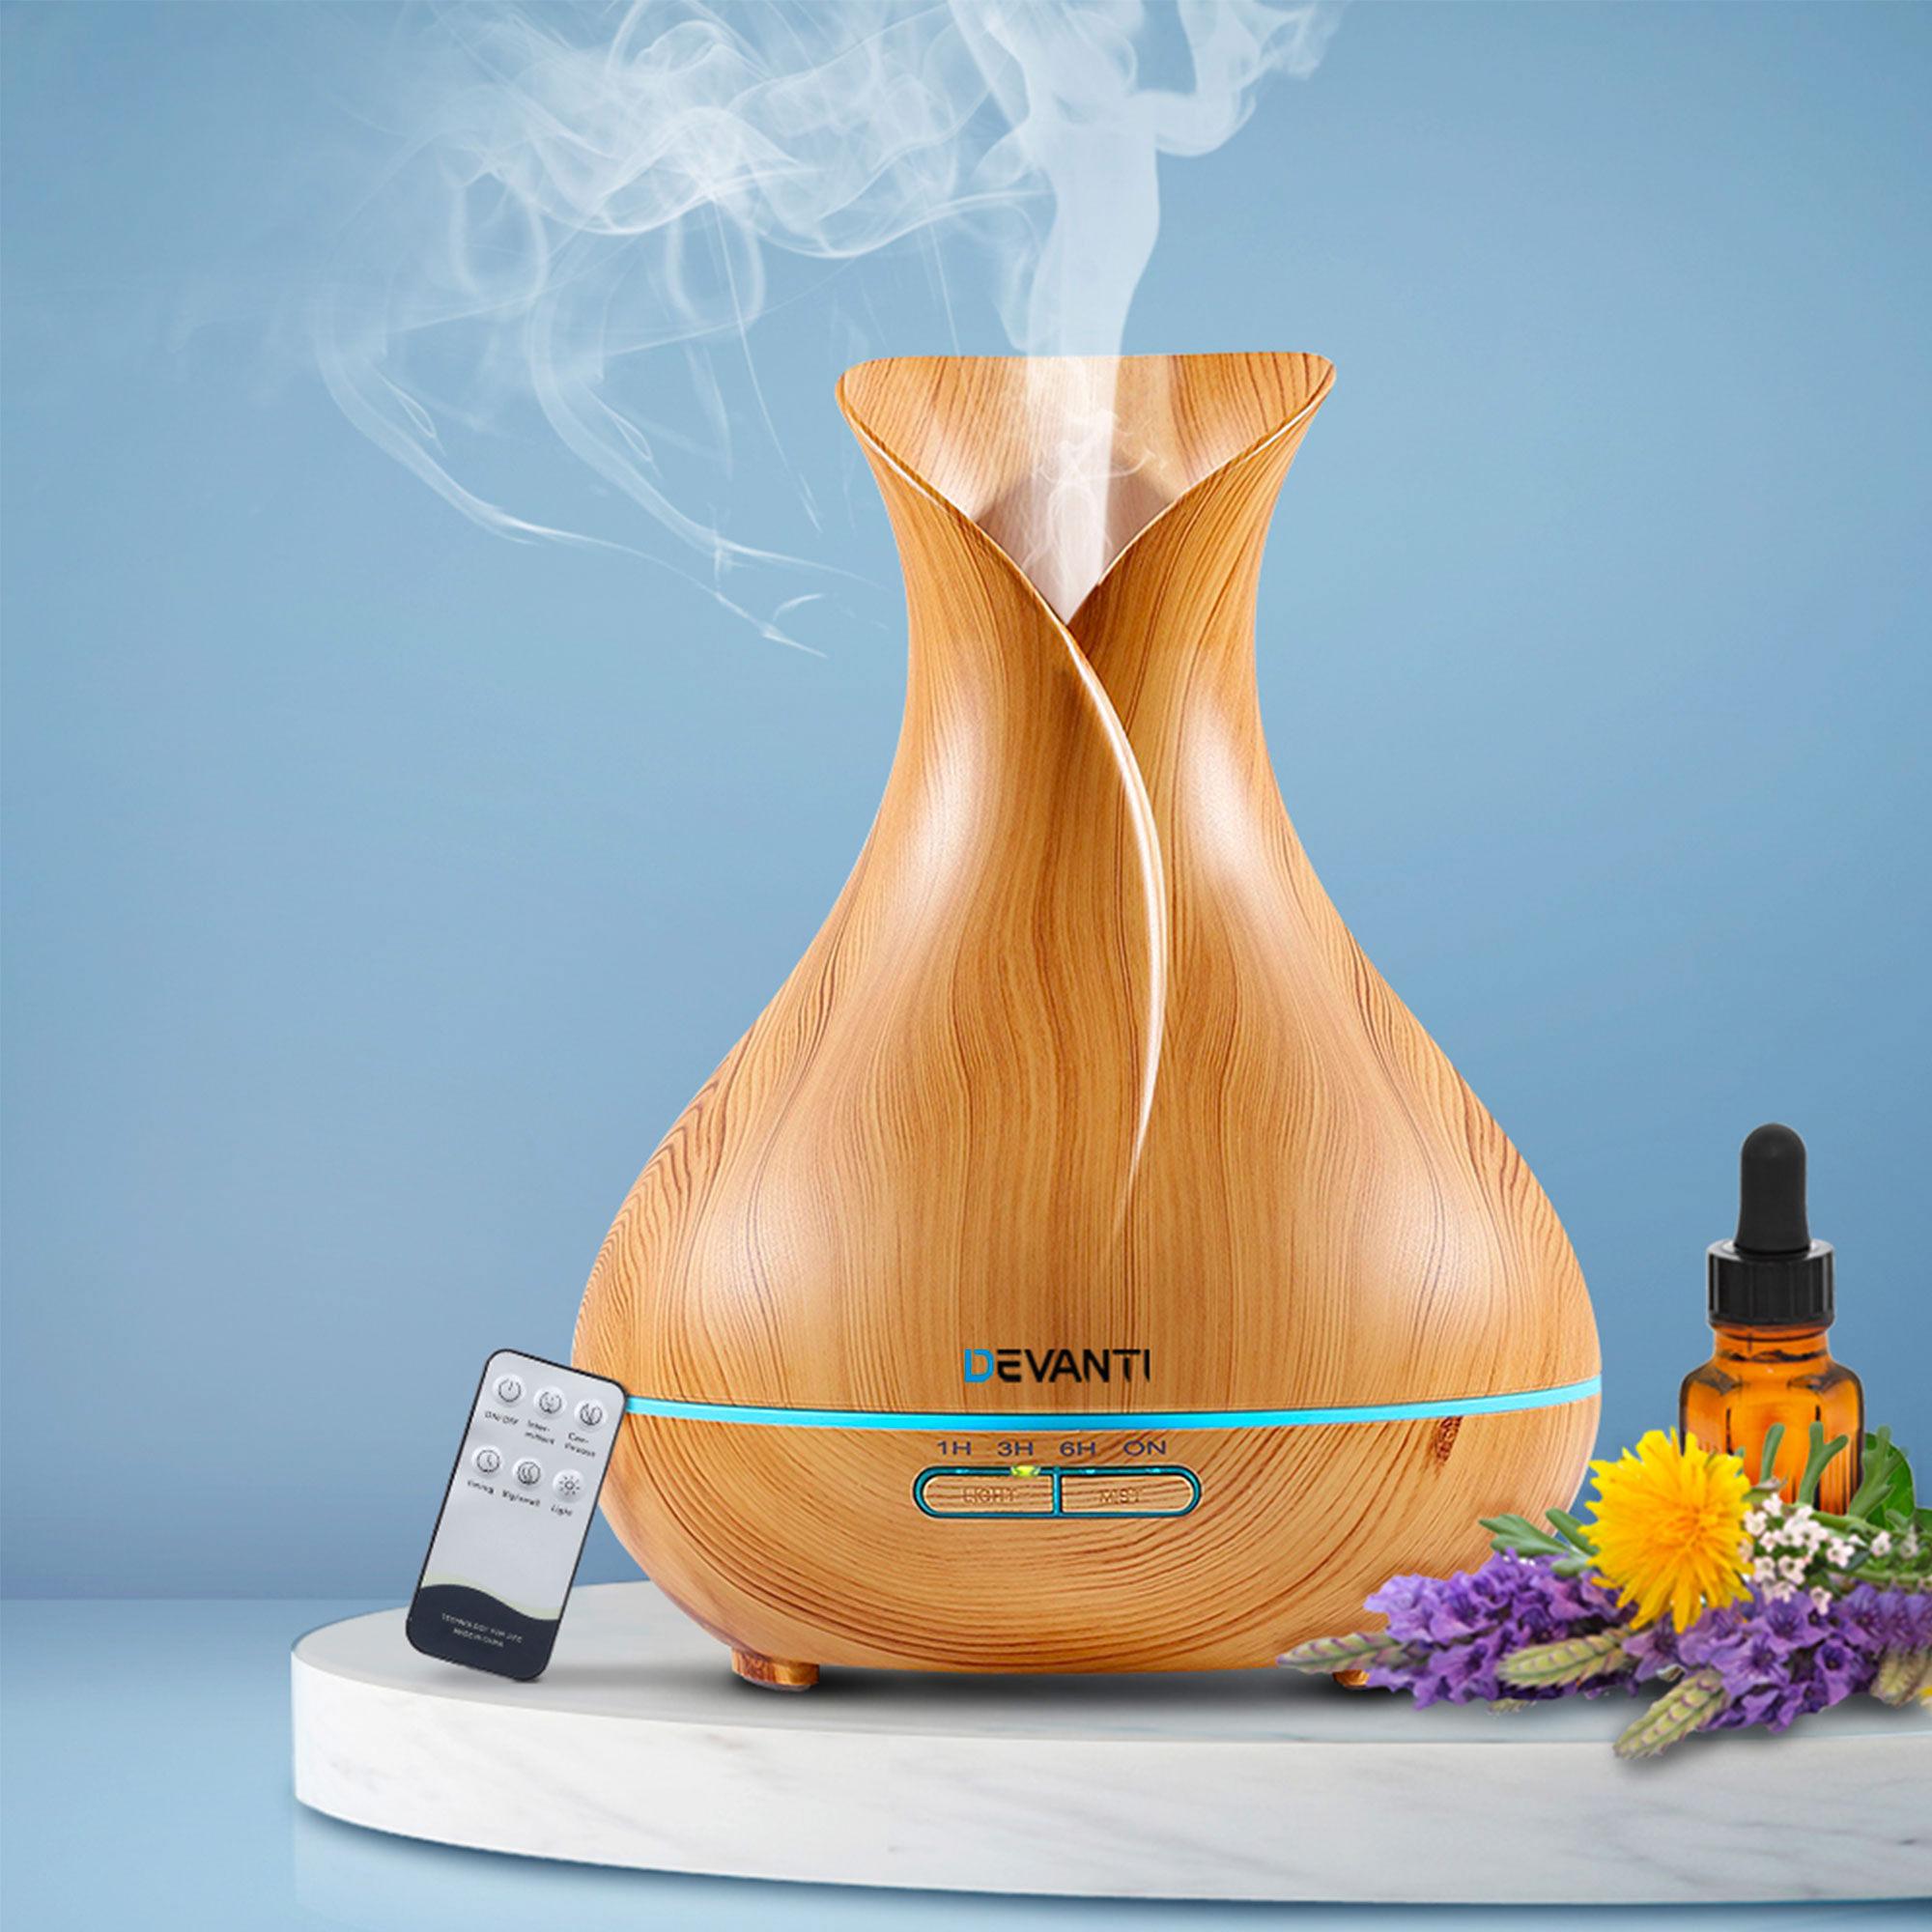 Devanti Aroma Diffuser 400ml Light Wood Vase Image 2